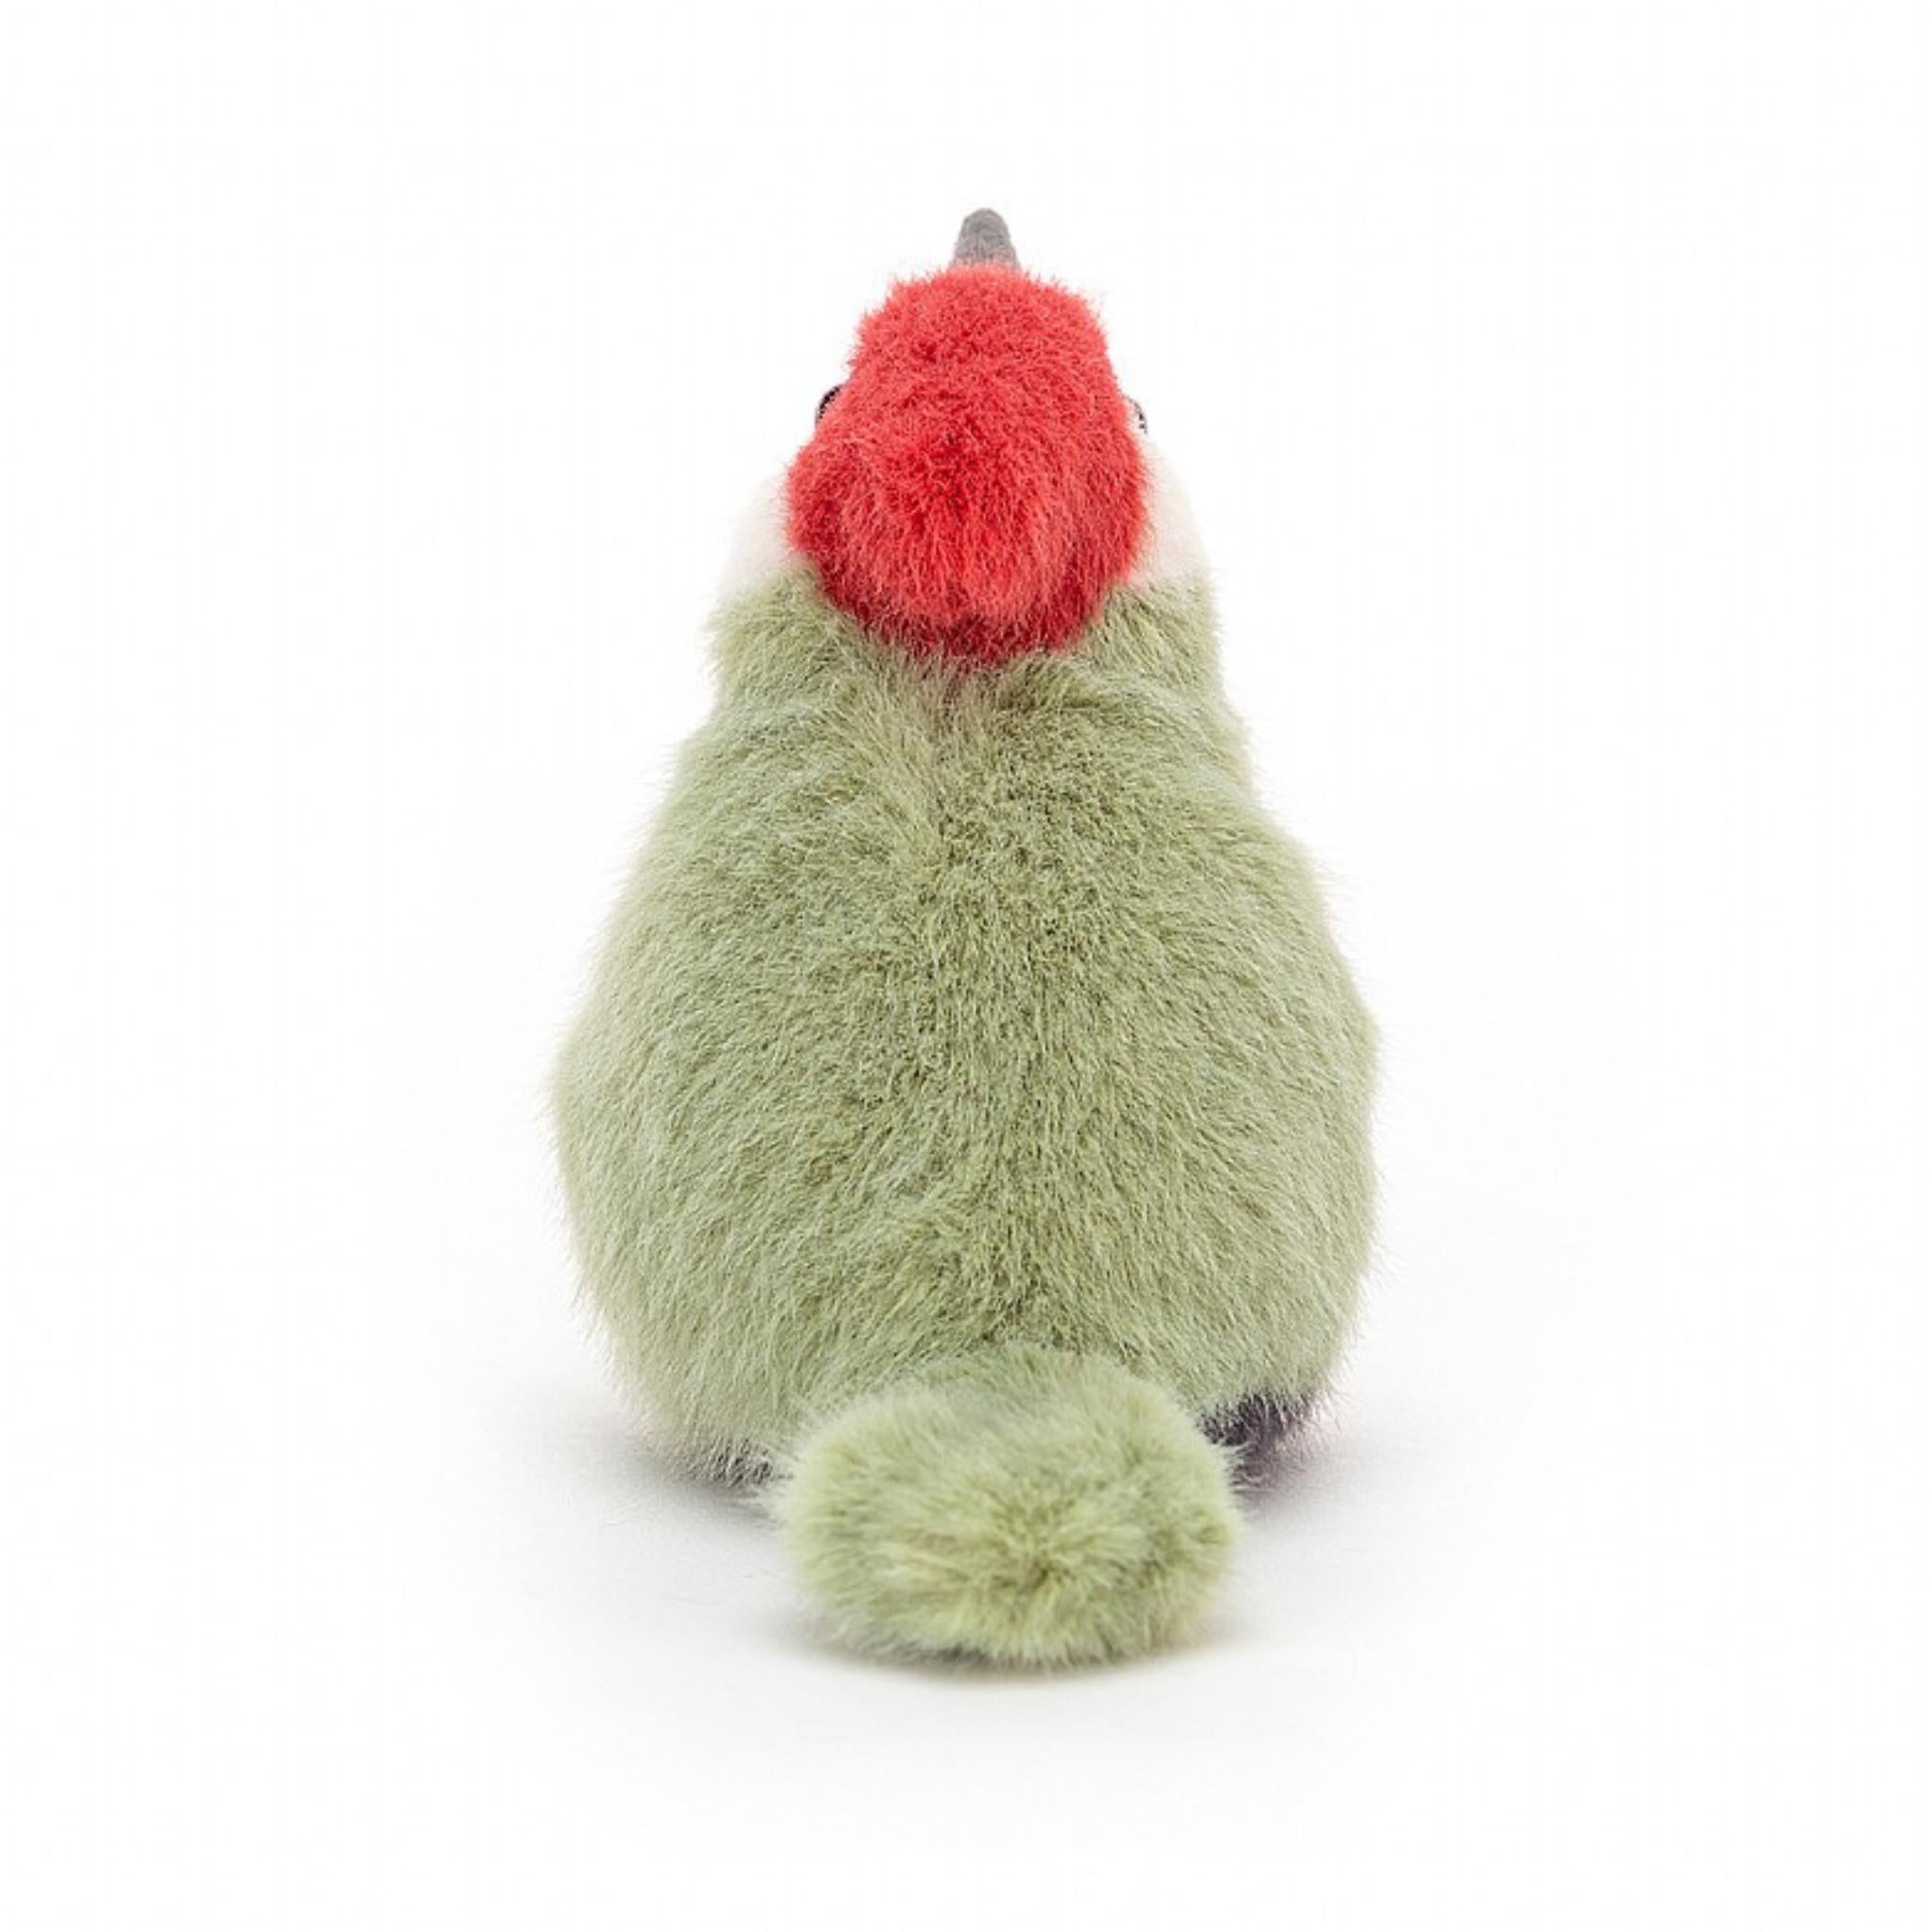 Birdling Woodpecker Soft Toy